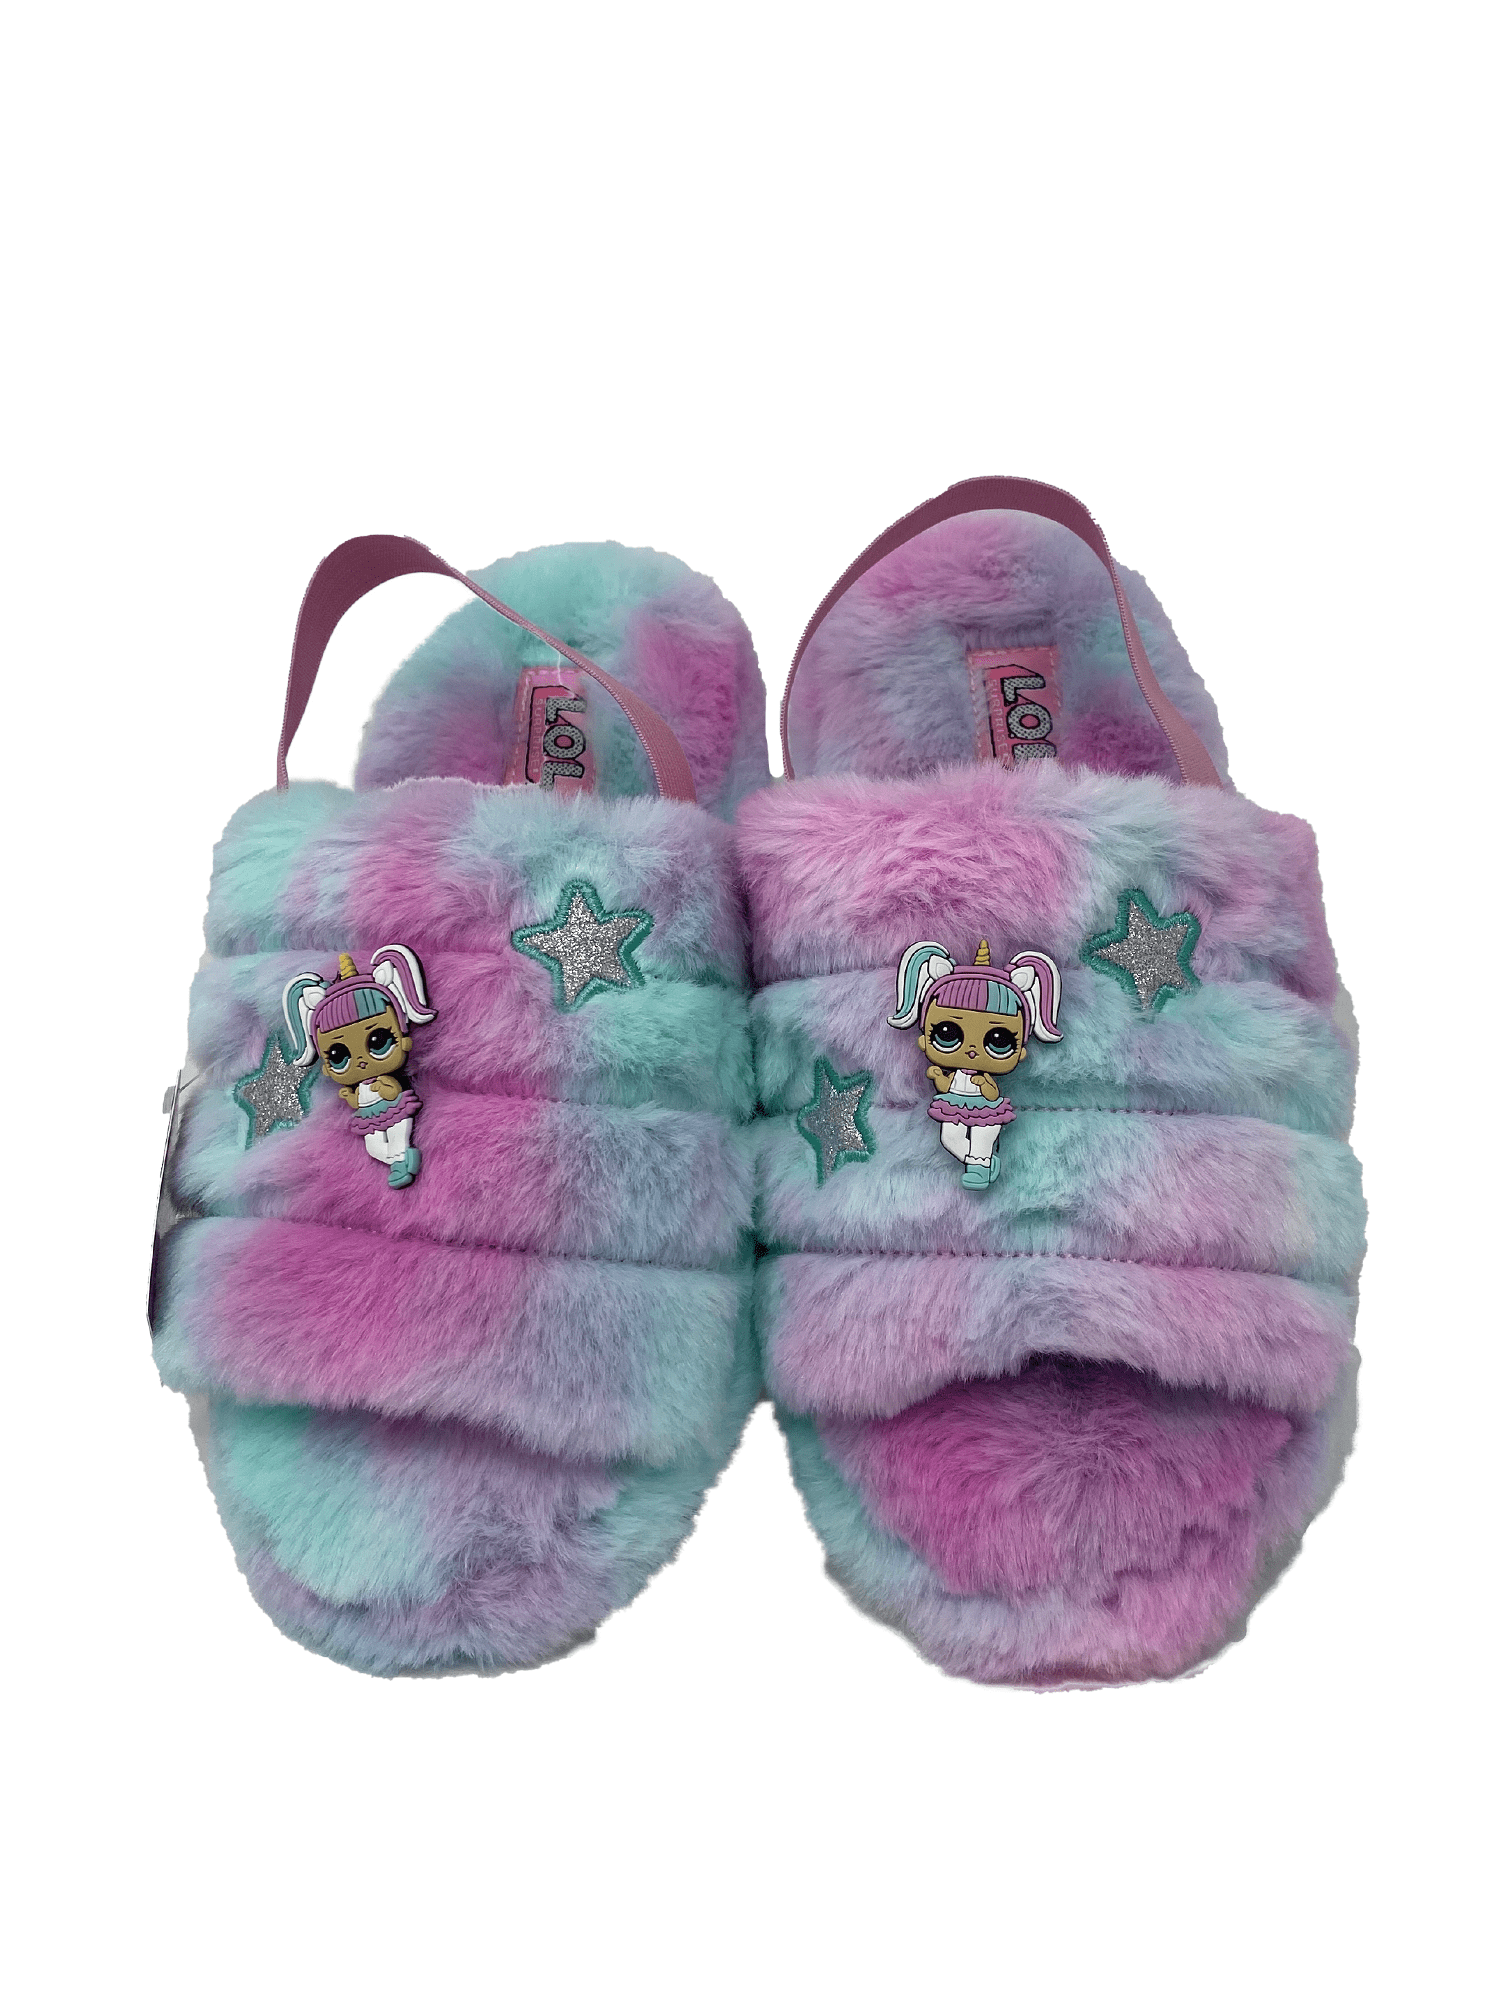 walmart kids slippers